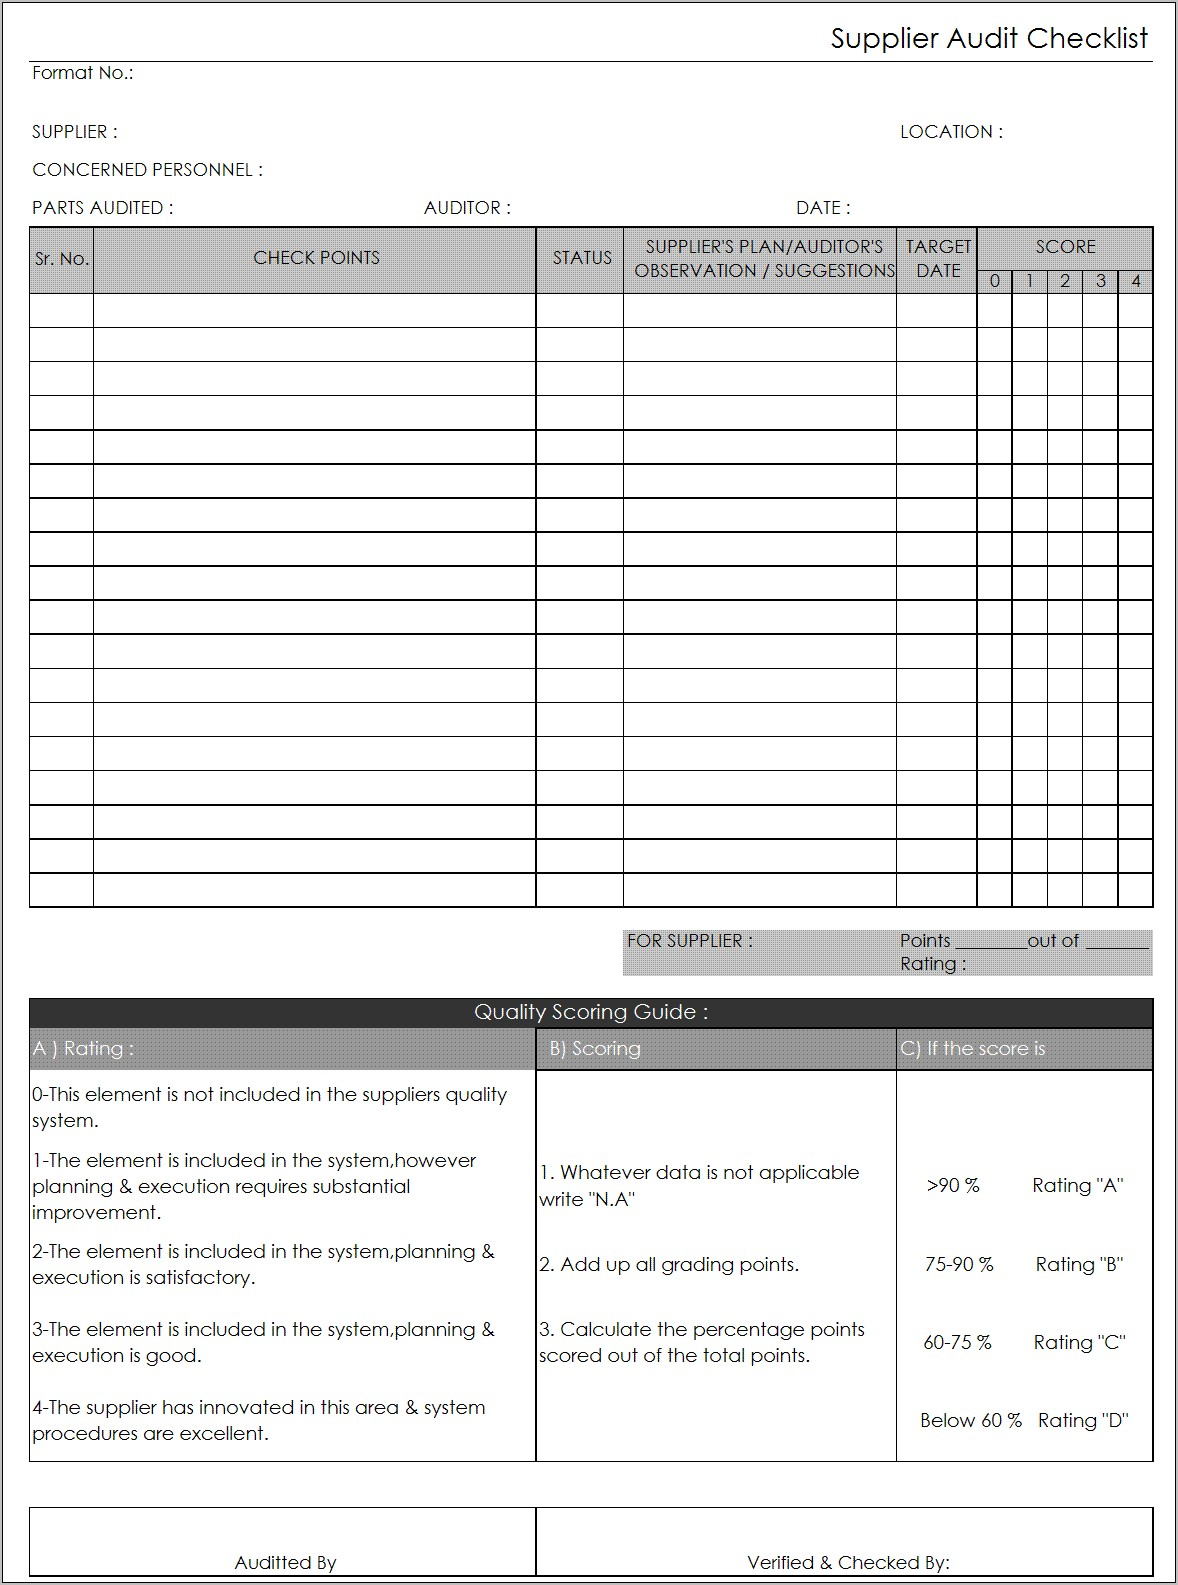 Supplier Audit Checklist Format